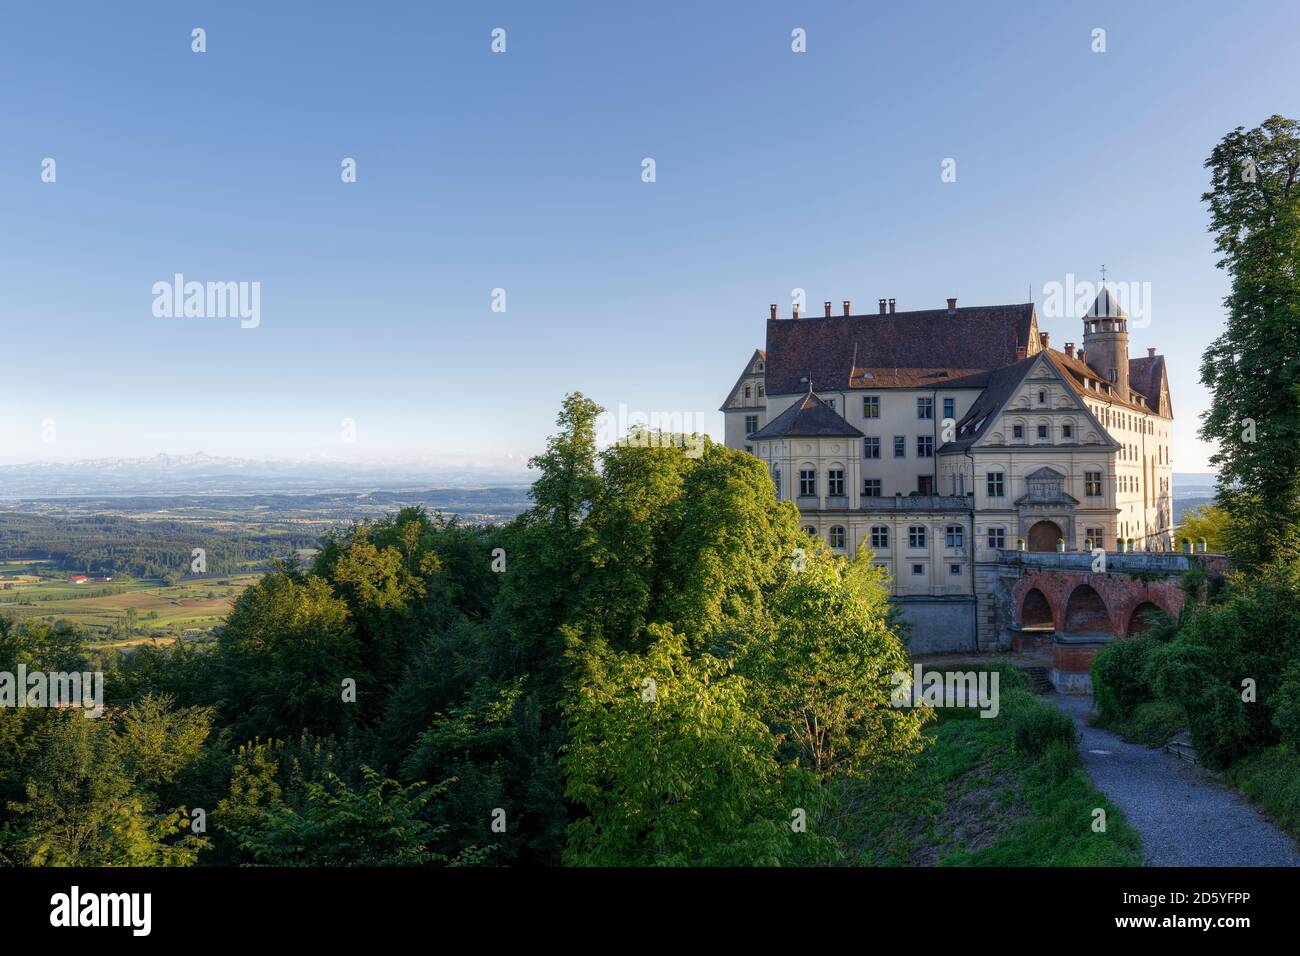 Germania, Baden-Wuerttemberg, castello di Heiligenberg Foto Stock